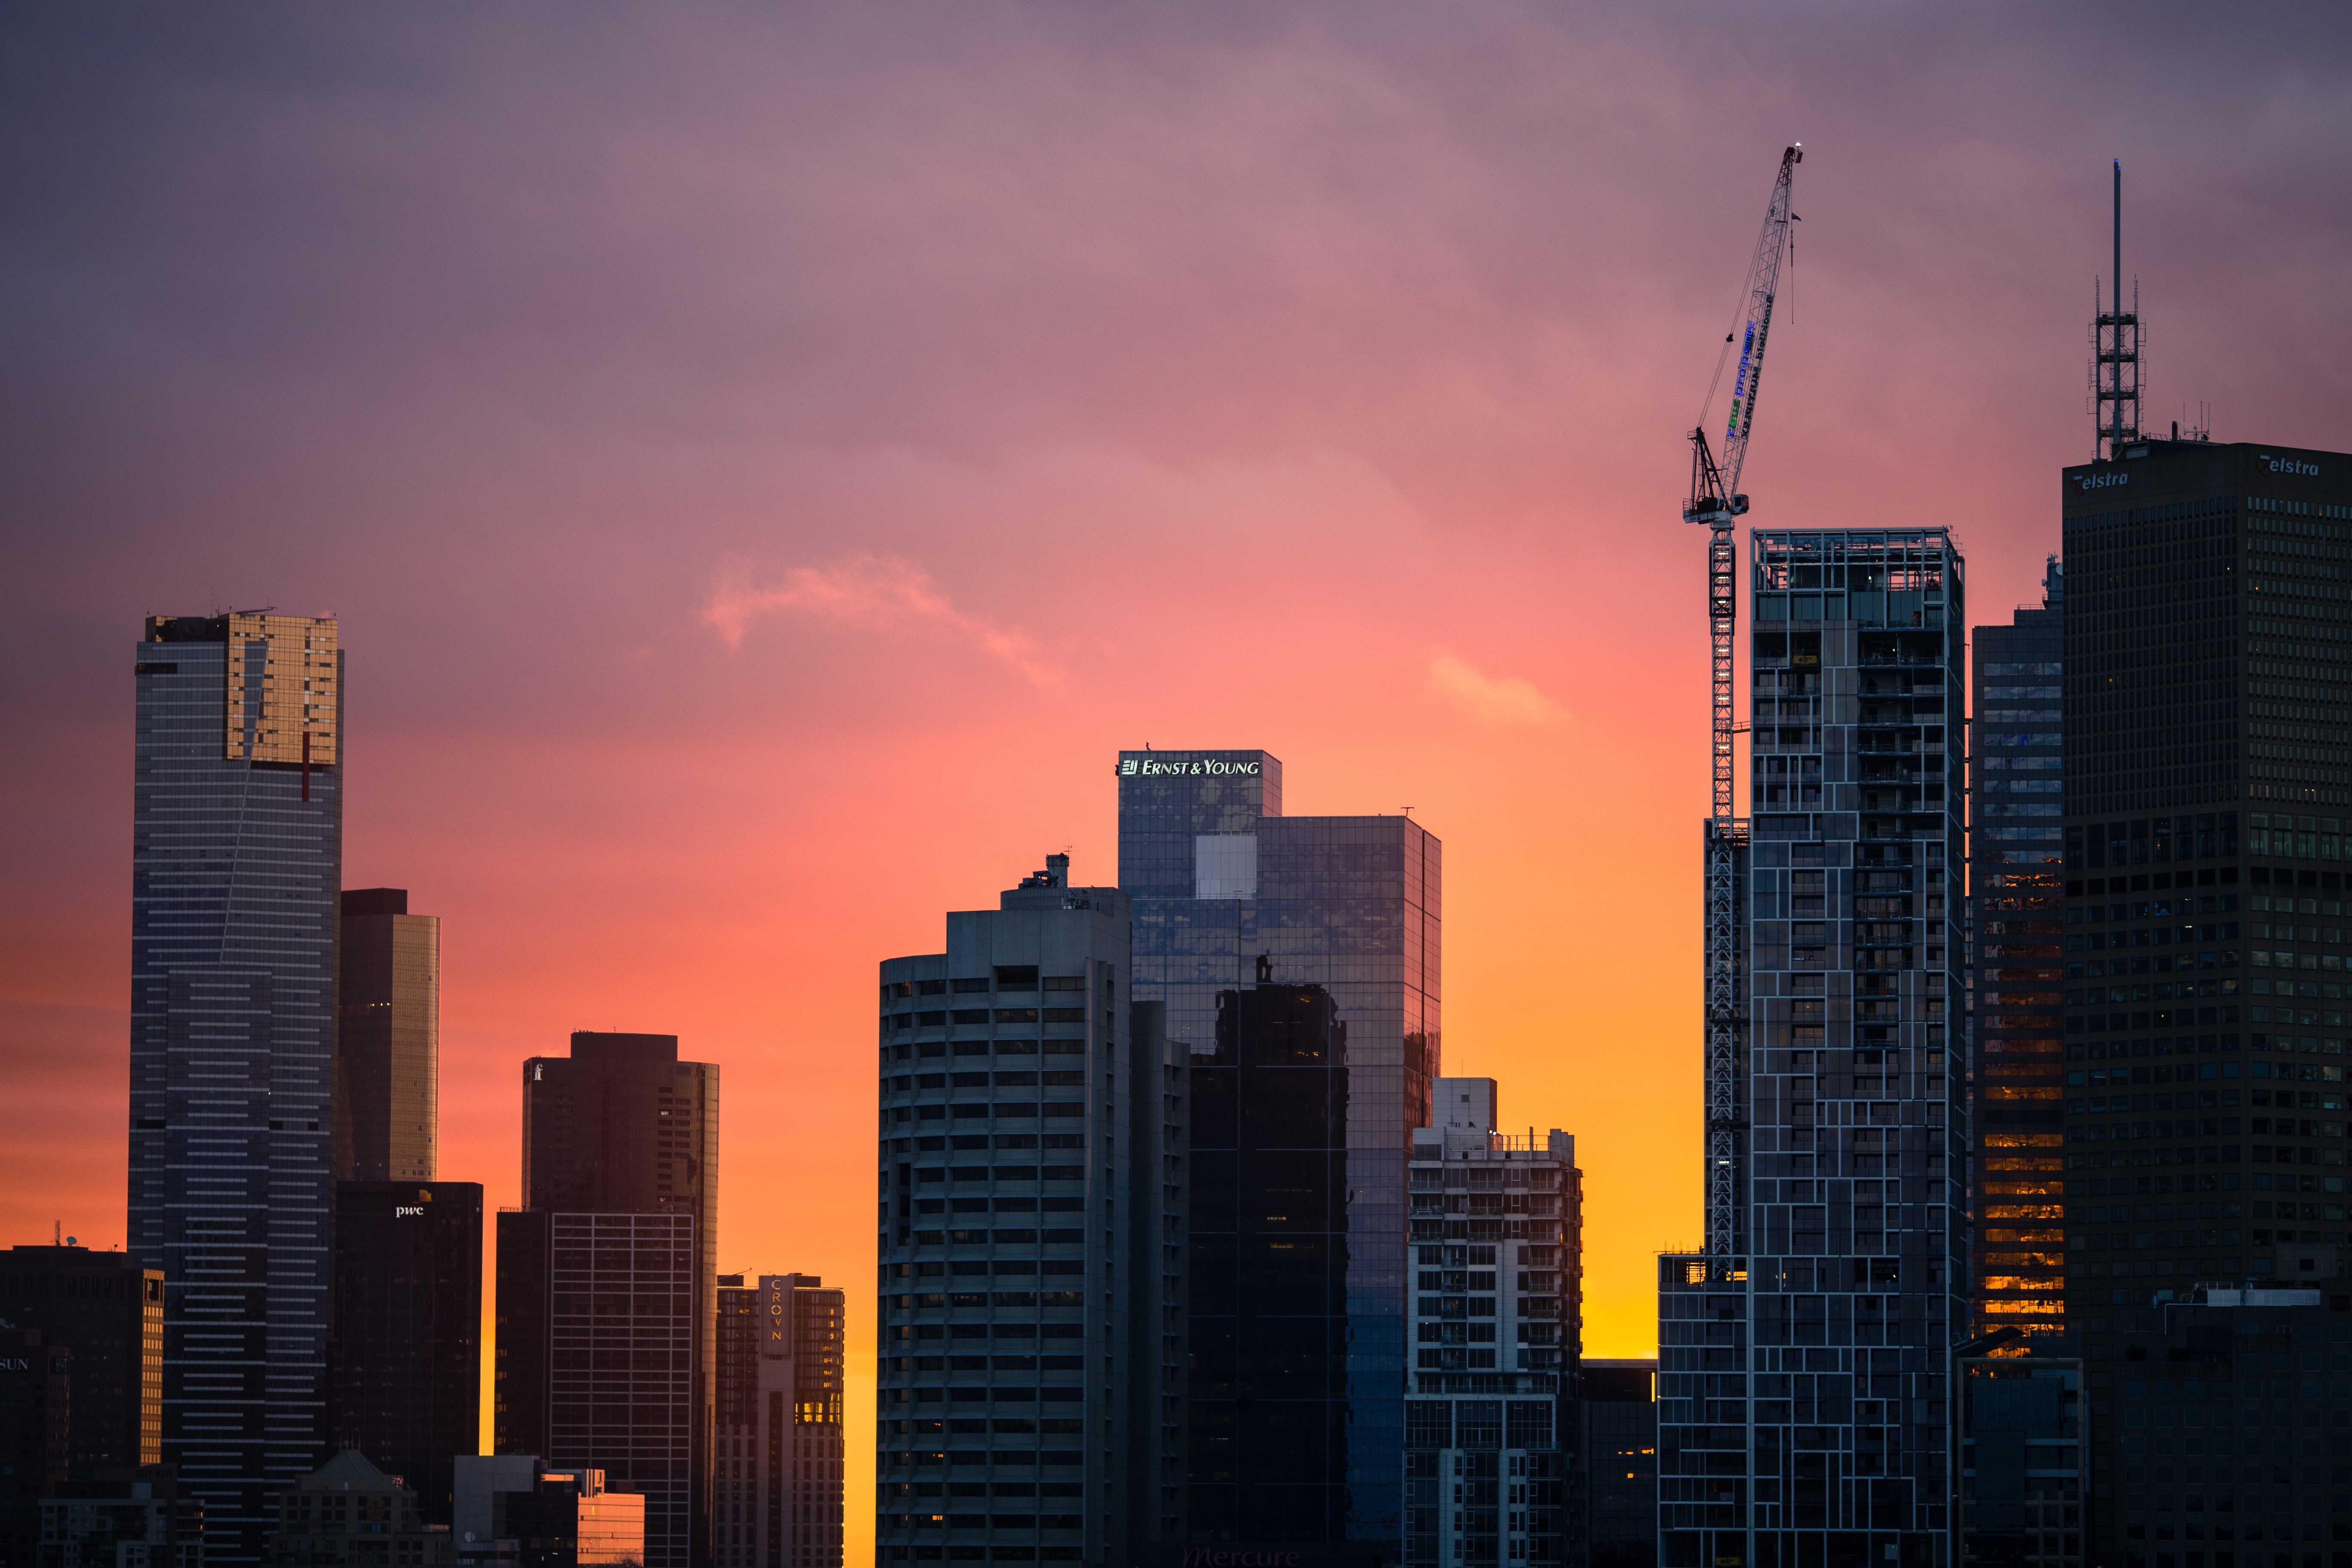 Melbourne skyline at sunset.